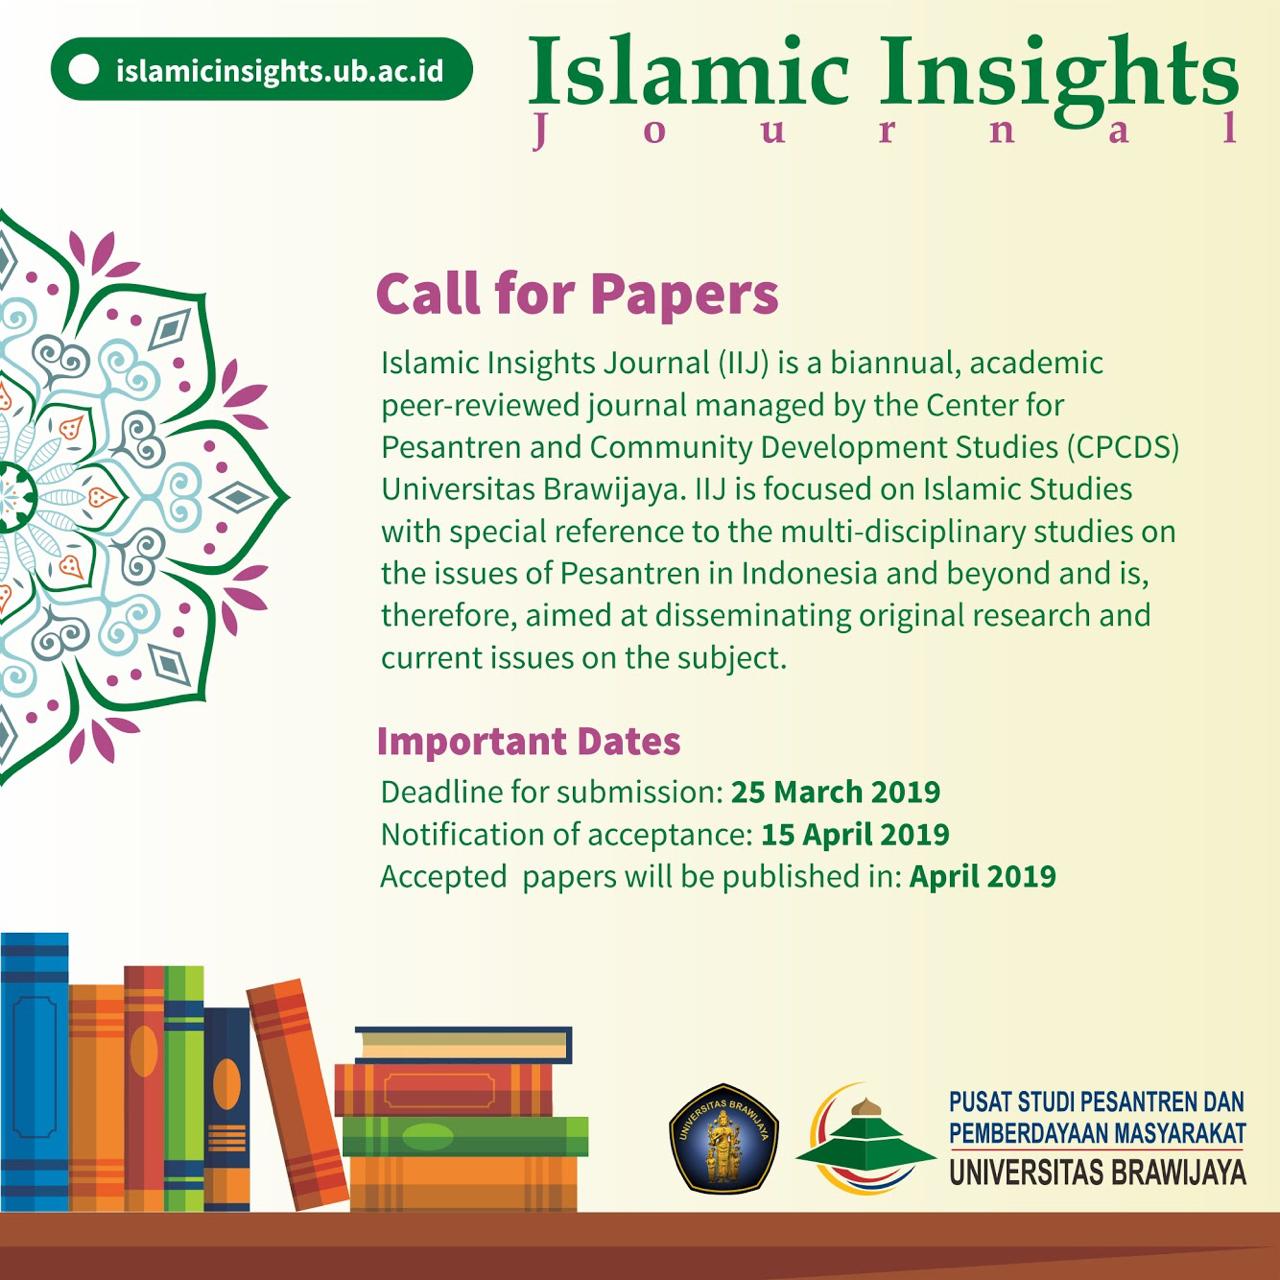 Islamic Insights Journal